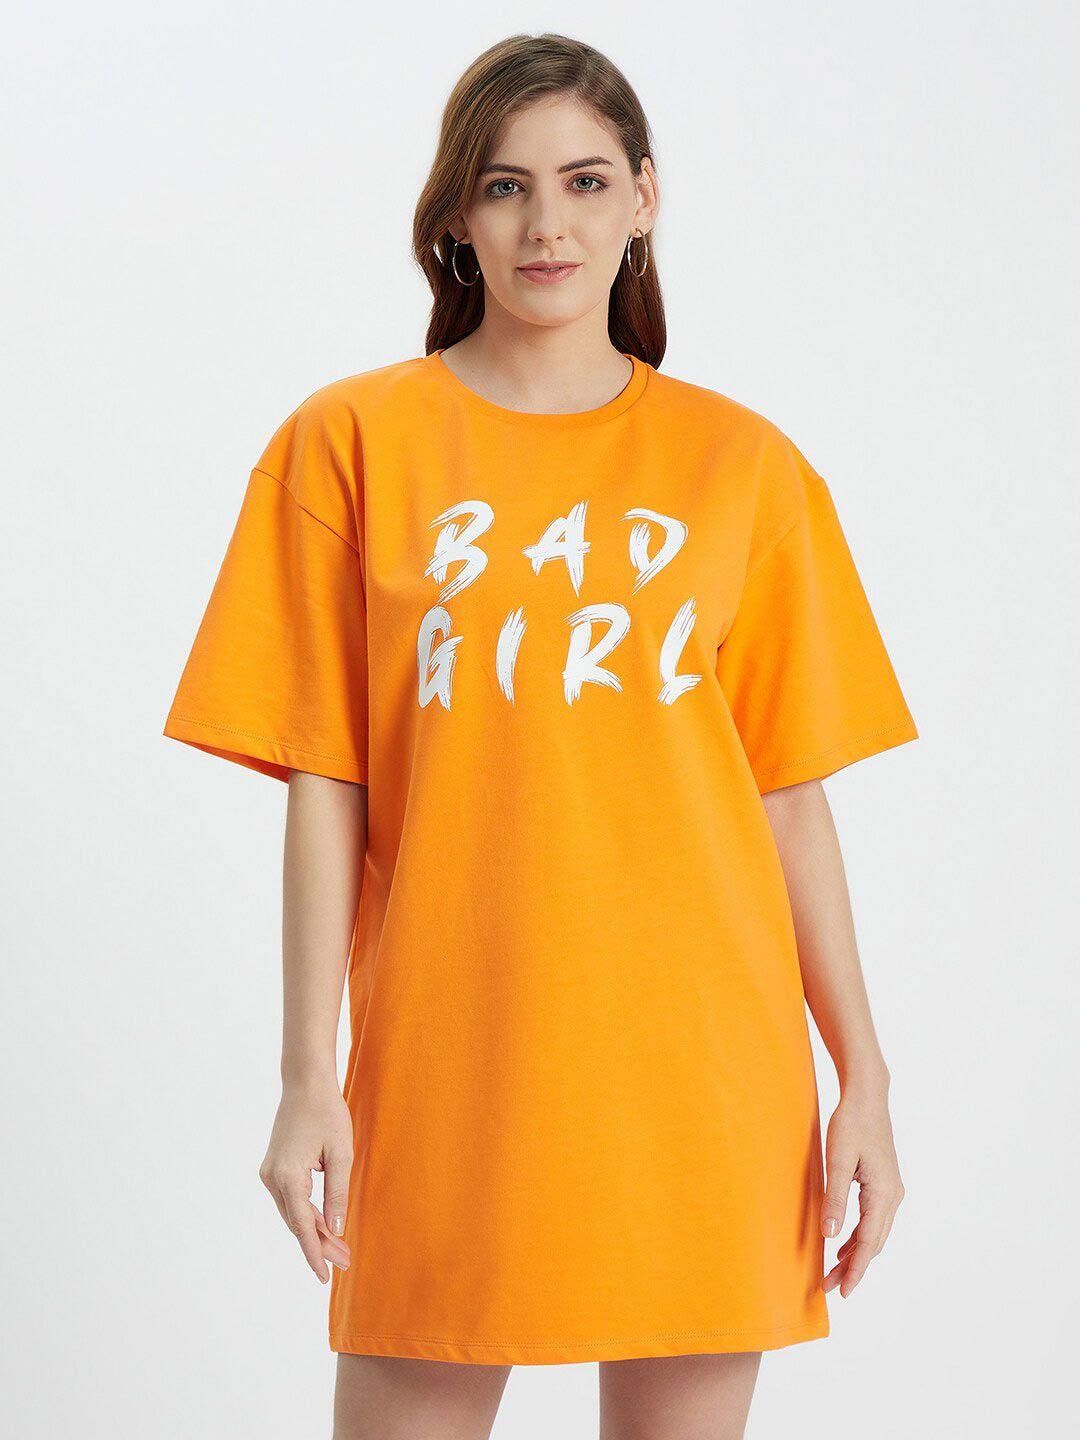 edrio orange t-shirt dress